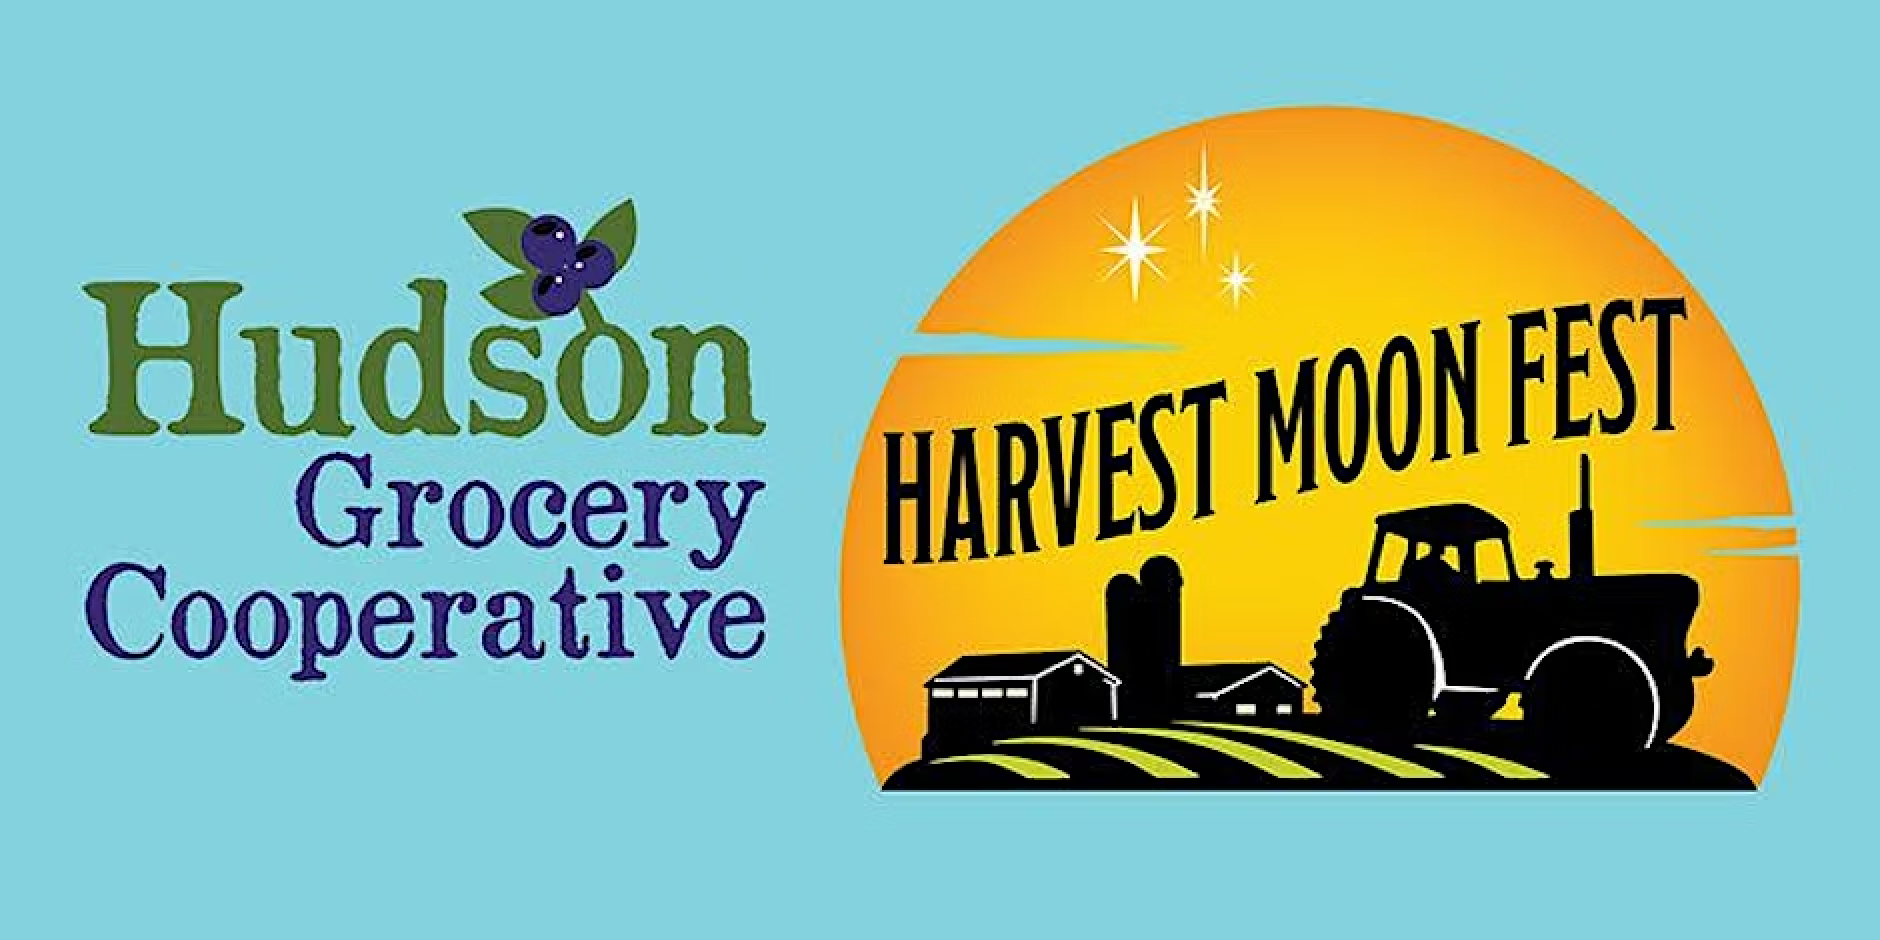 Hudson Grocery Cooperative's 2022 Harvest Moon Festival